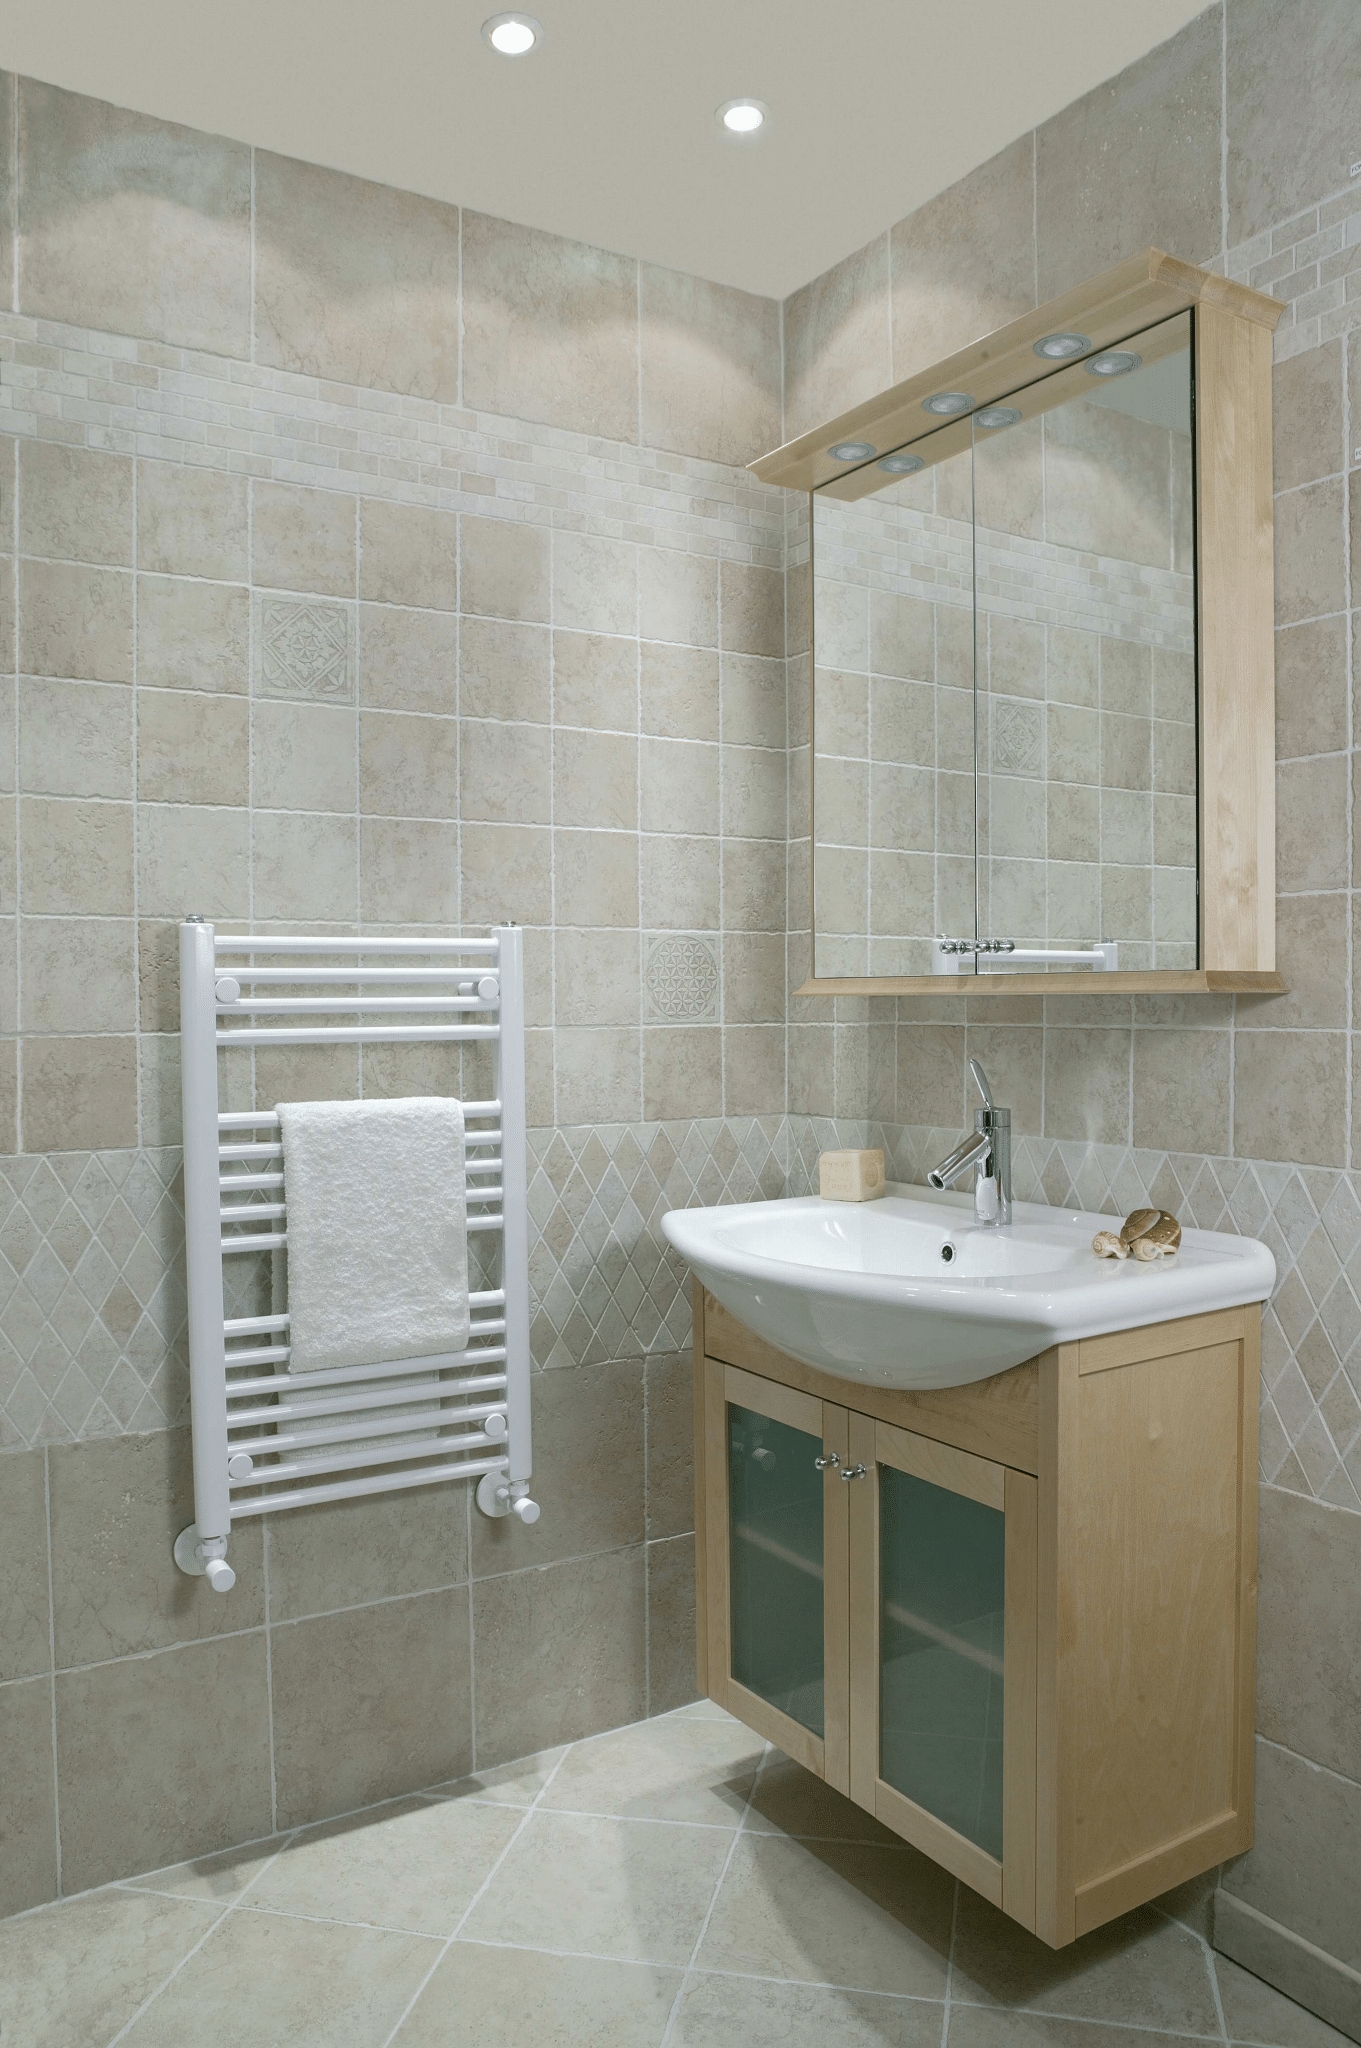 ICO Bath E1041 Tuzio Savoy 19"x47.5" Electric Plug-In Towel Warmer - Gloss White